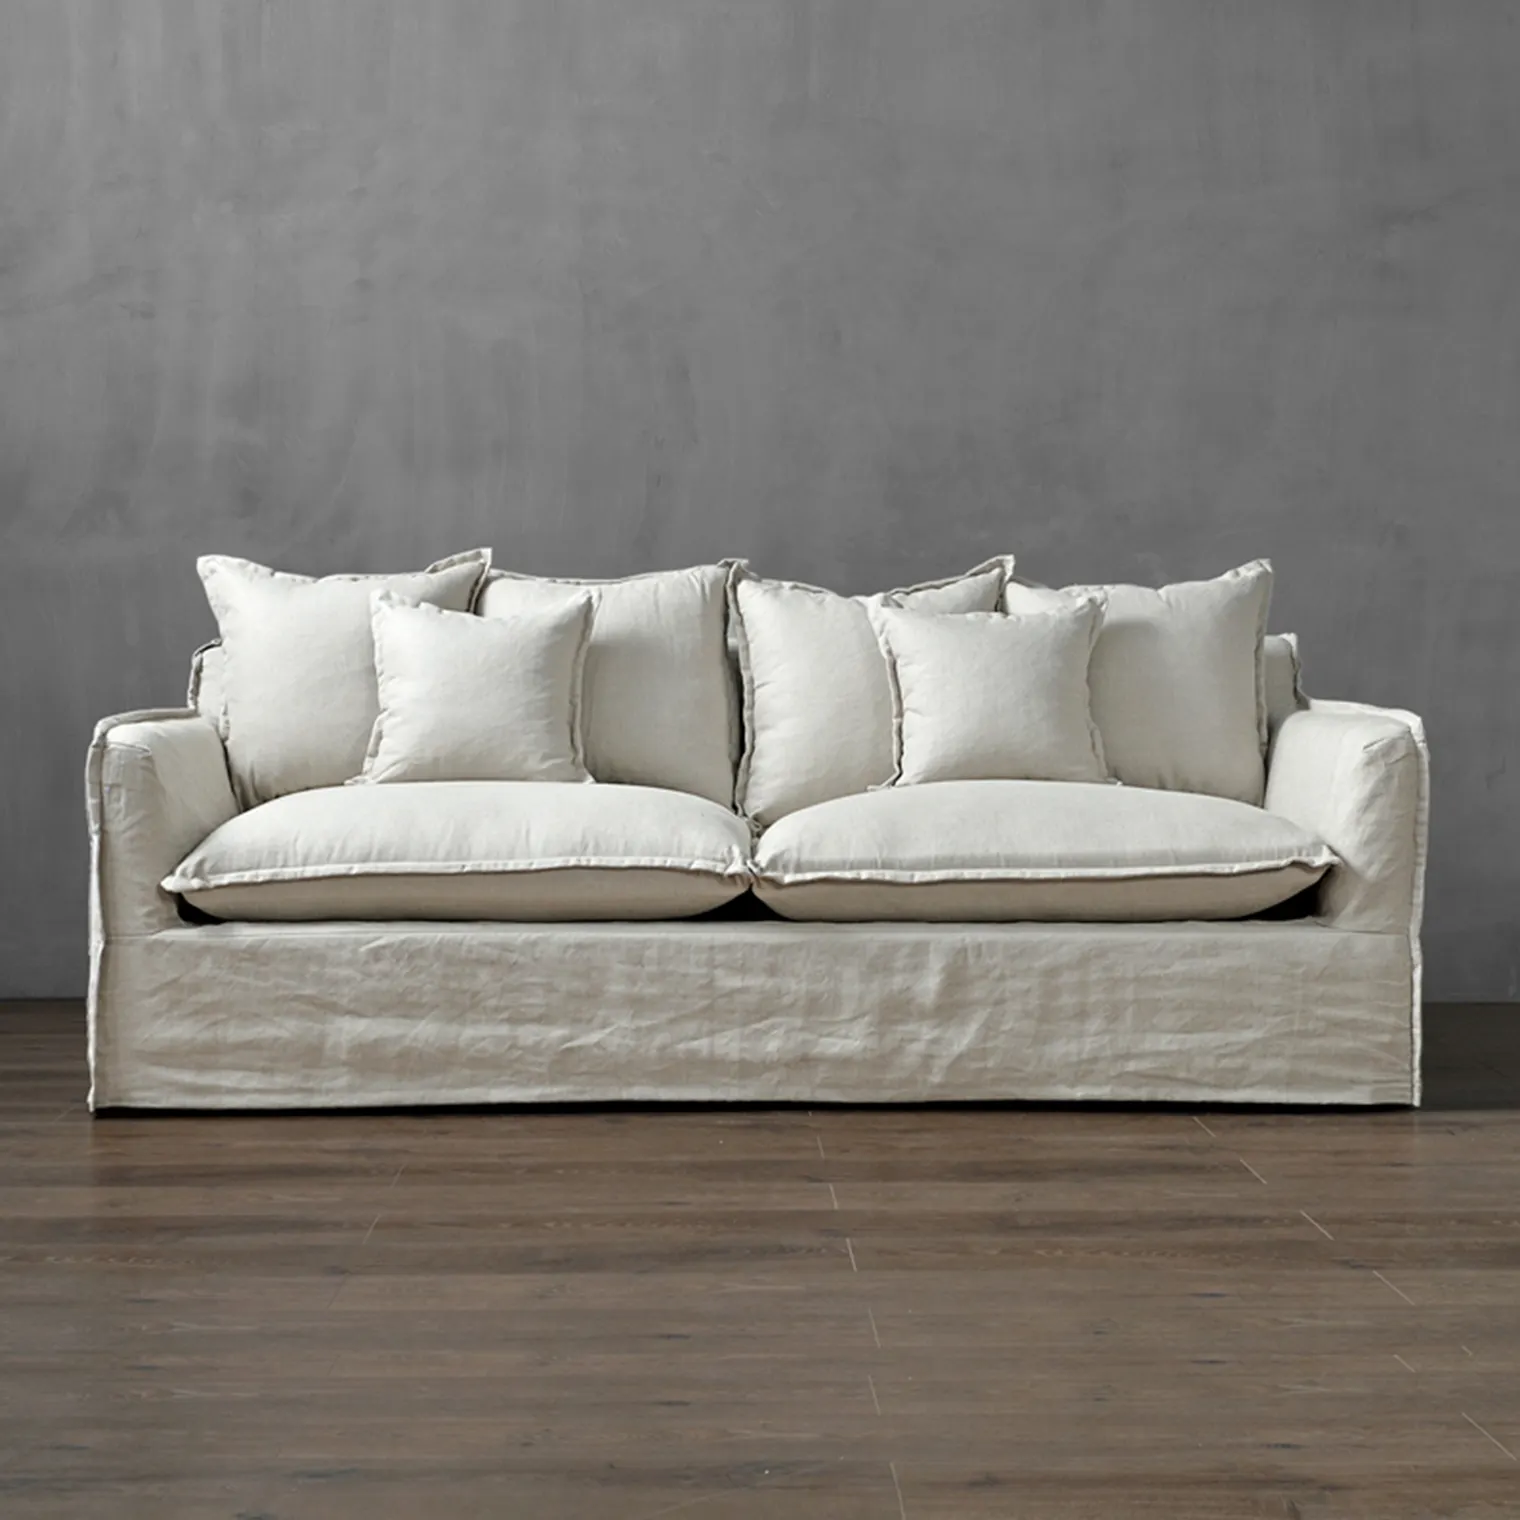 OEM factory love seat three seat living room sofas set furniture English style cloth sofa